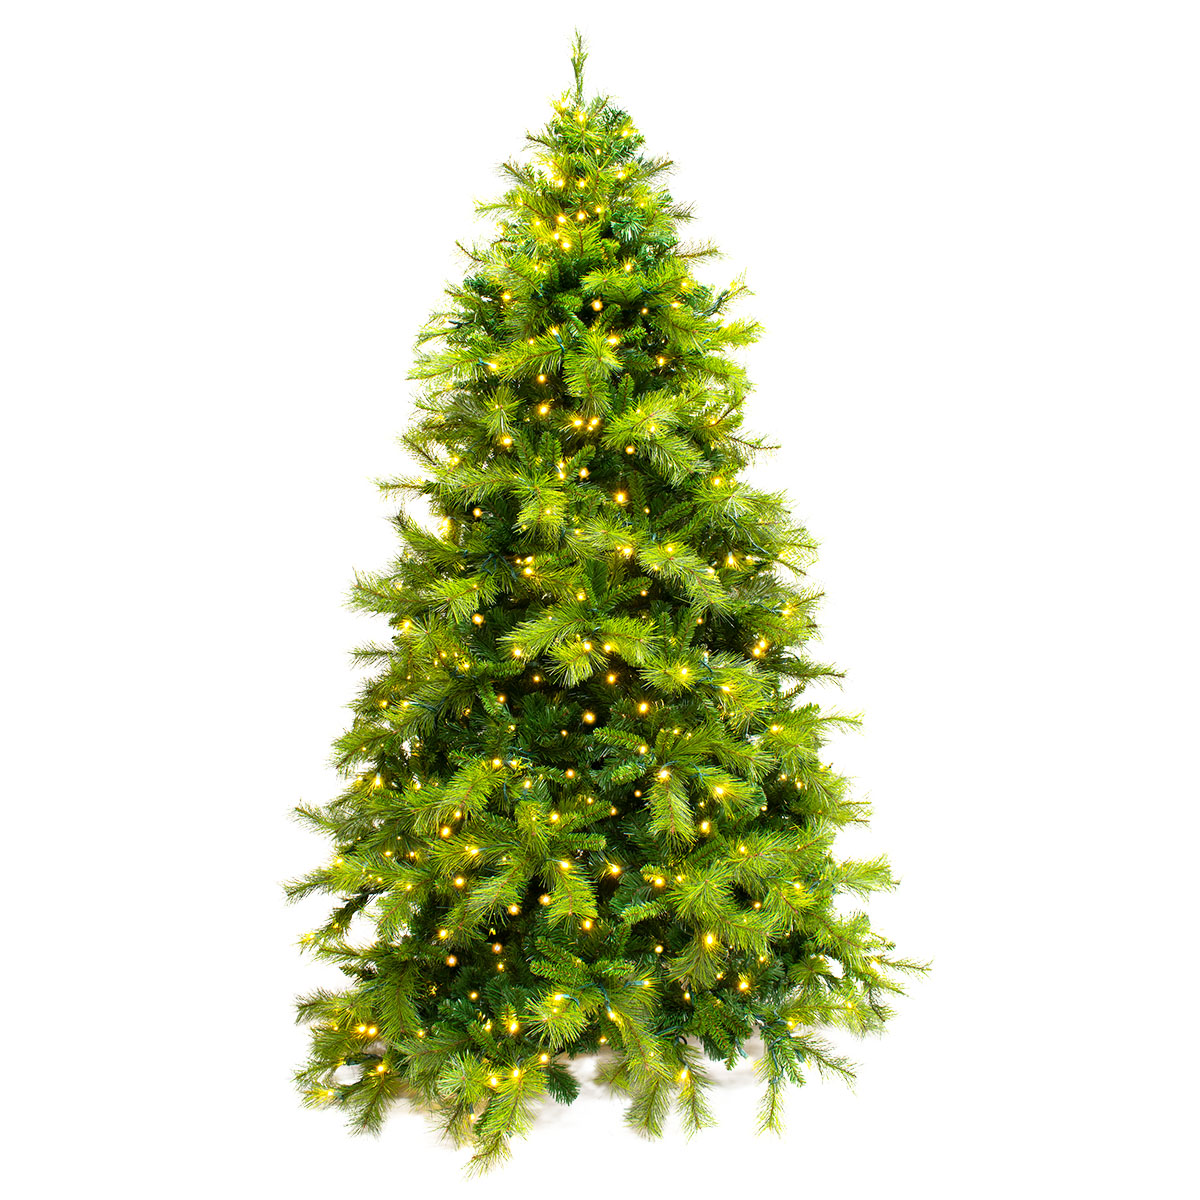 Mixed Pine Christmas Tree - Warm White Glow LEDs - One-Plug Pole Power Supply - 9ft Tall